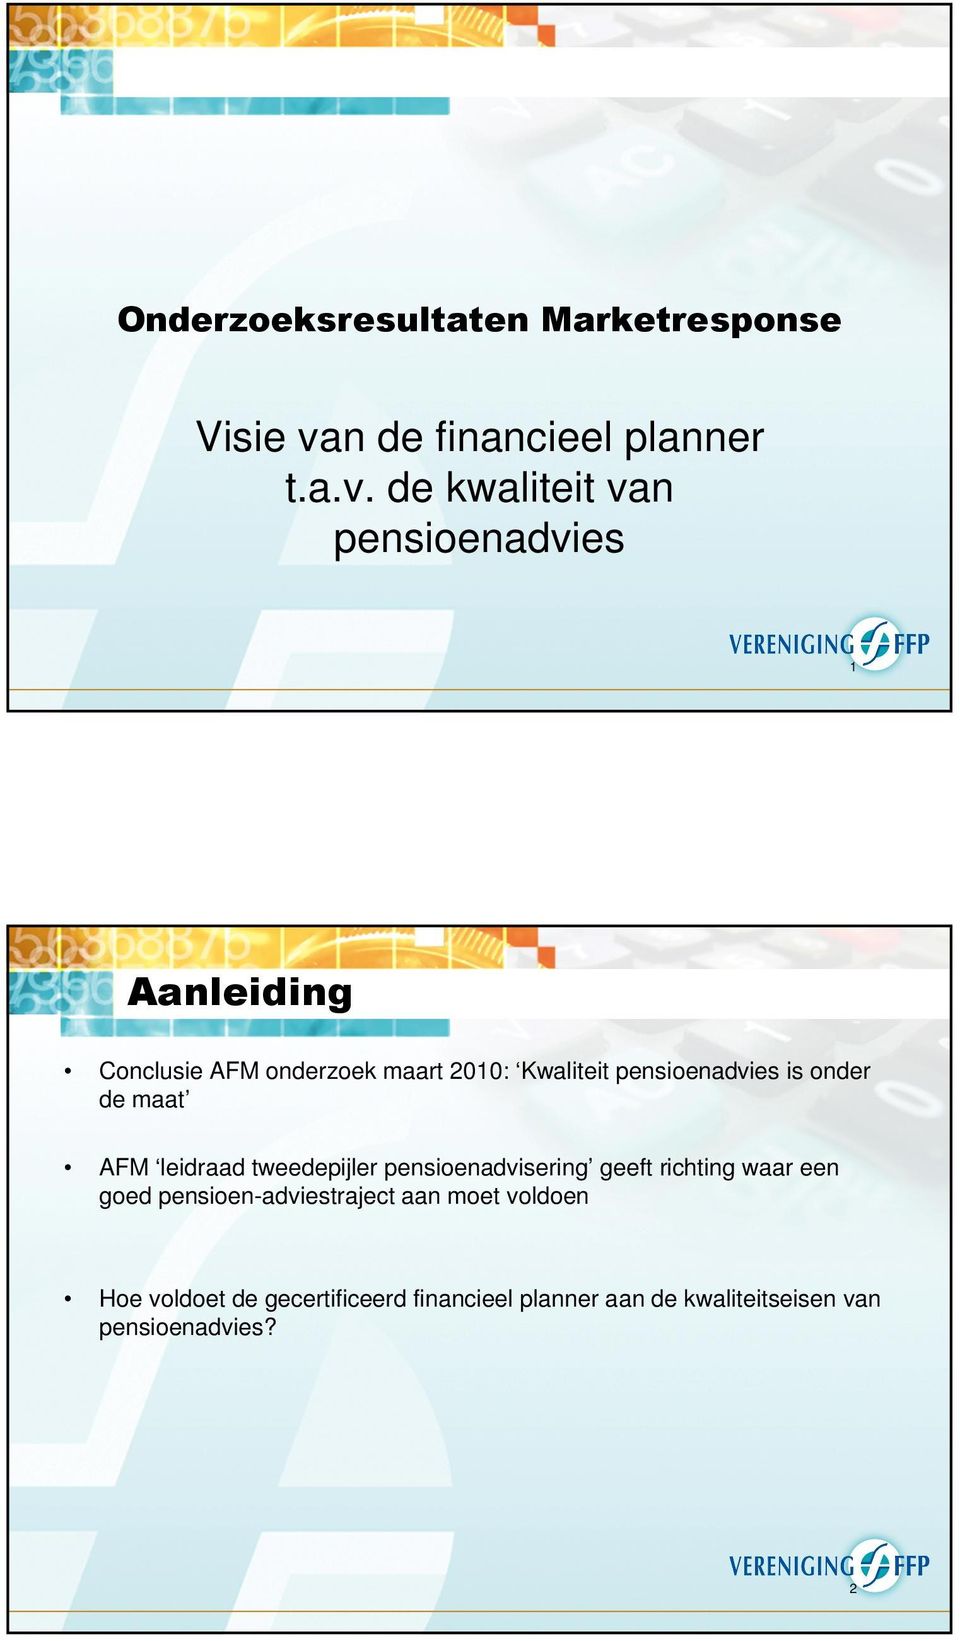 de kwaliteit van pensioenadvies 1 Aanleiding Conclusie AFM onderzoek maart 2010: Kwaliteit